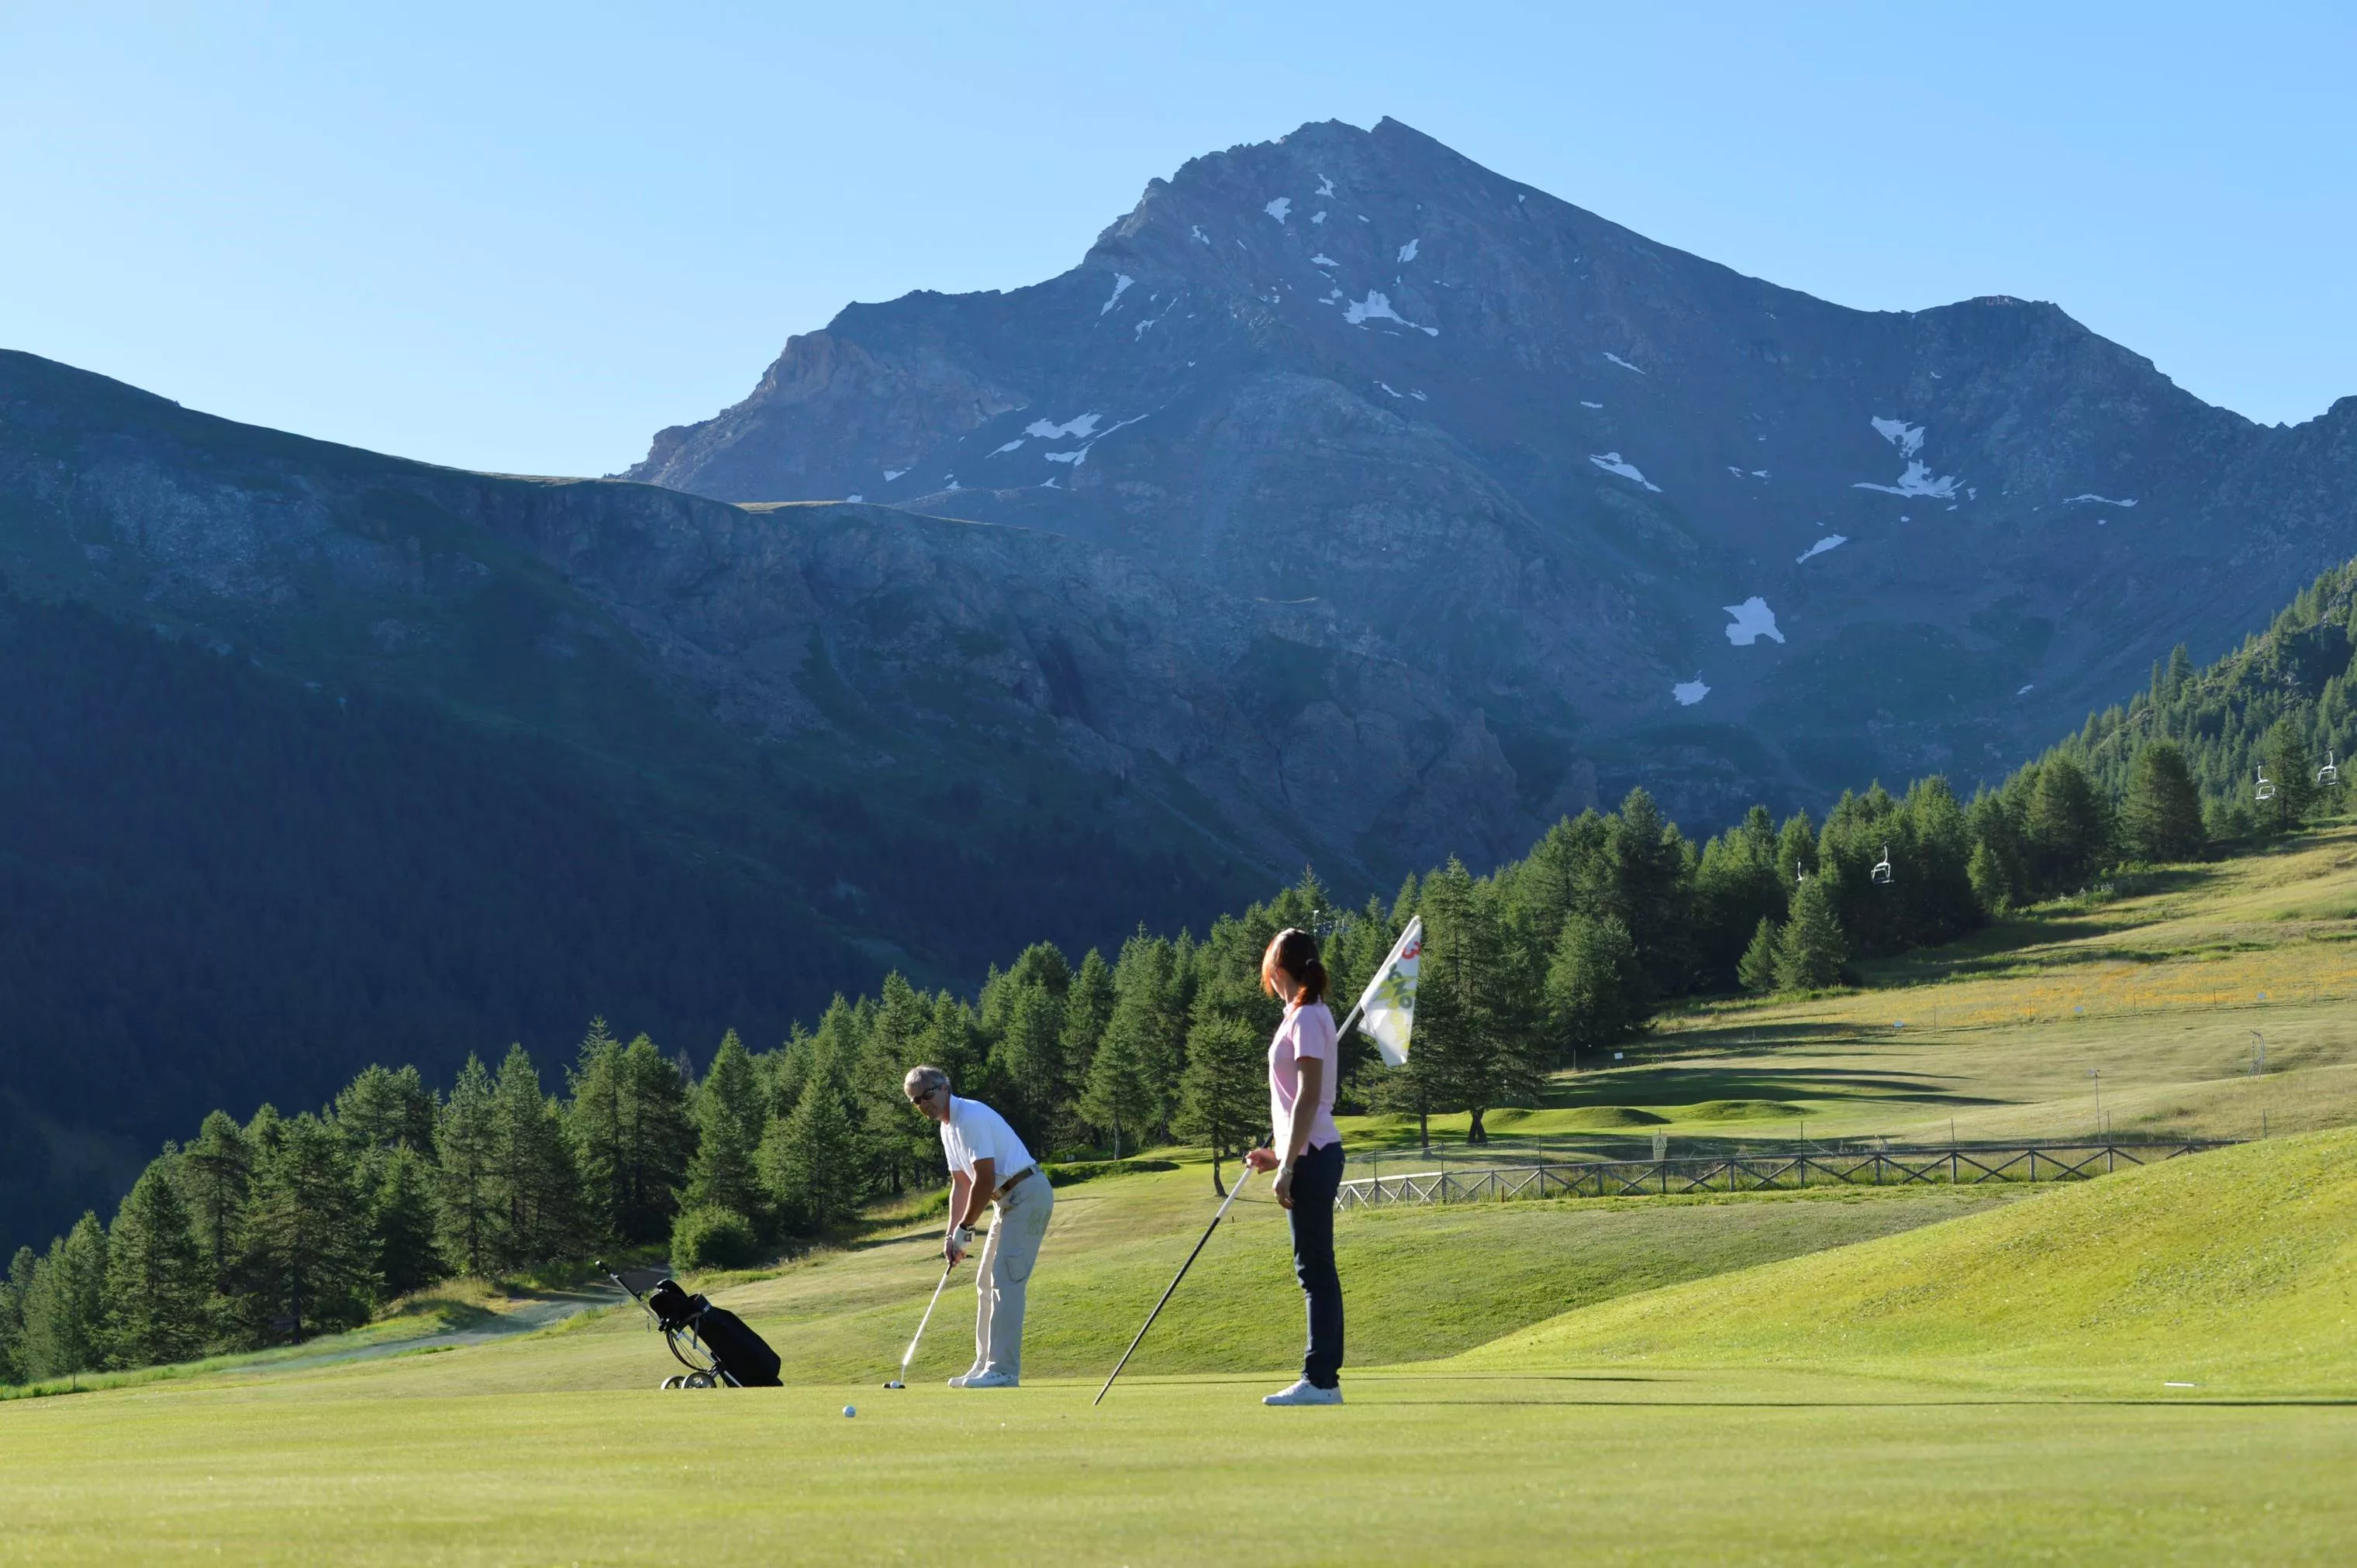 Golf Pragelato in Italy, Europe | Golf - Rated 0.8